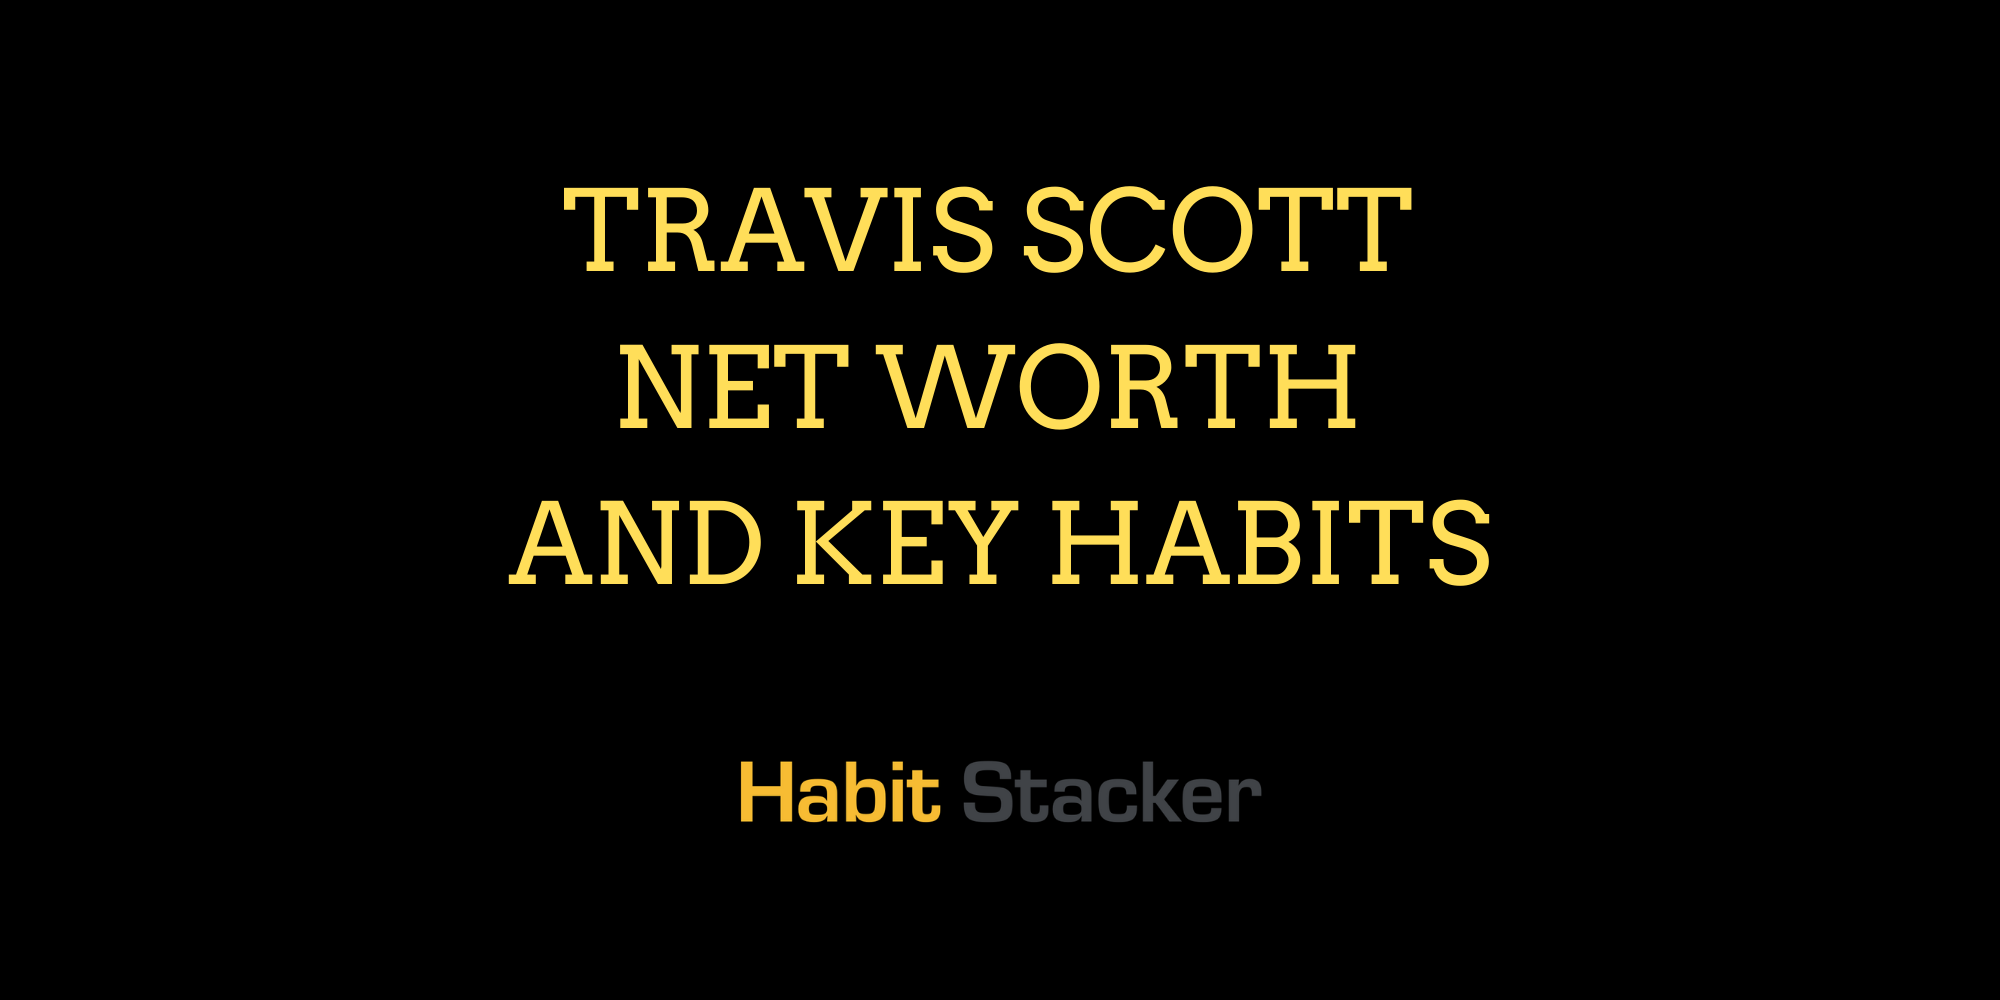 Travis Scott Net worth and Key Habits